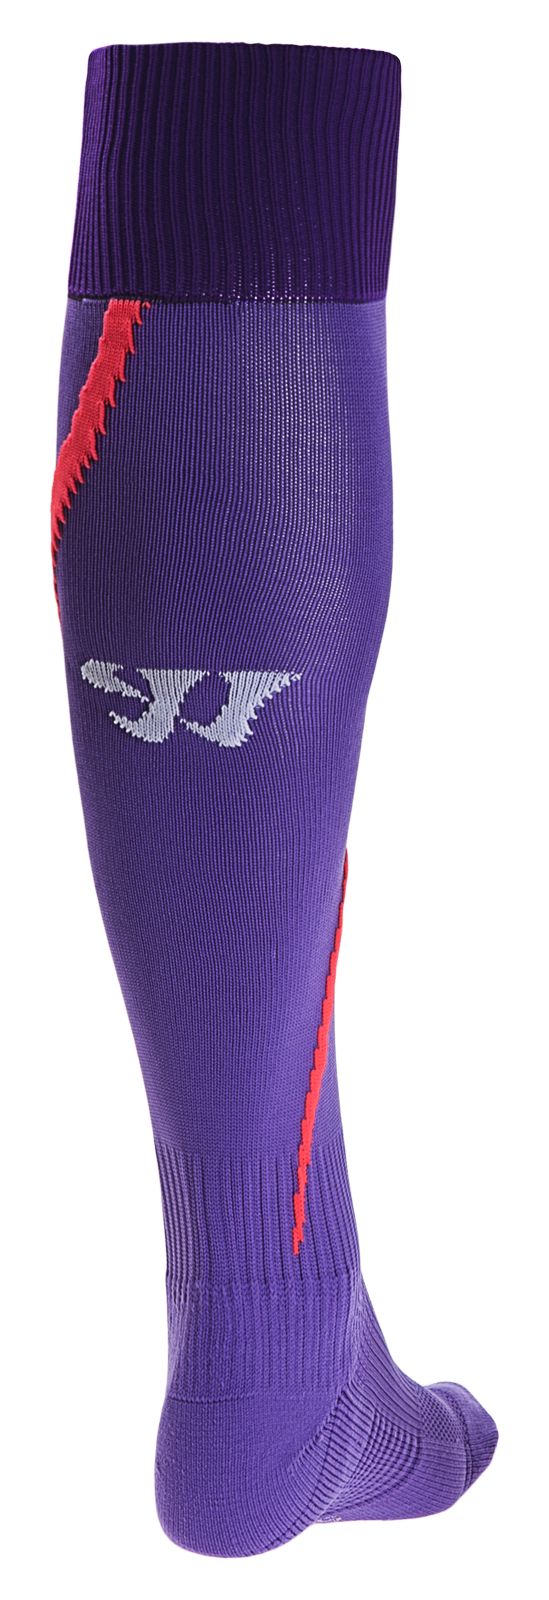 Liverpool Away Goalkeeper Sock 2013/14, Blackberry Cord with Prism Violet & Fluorescent Pink image number 0